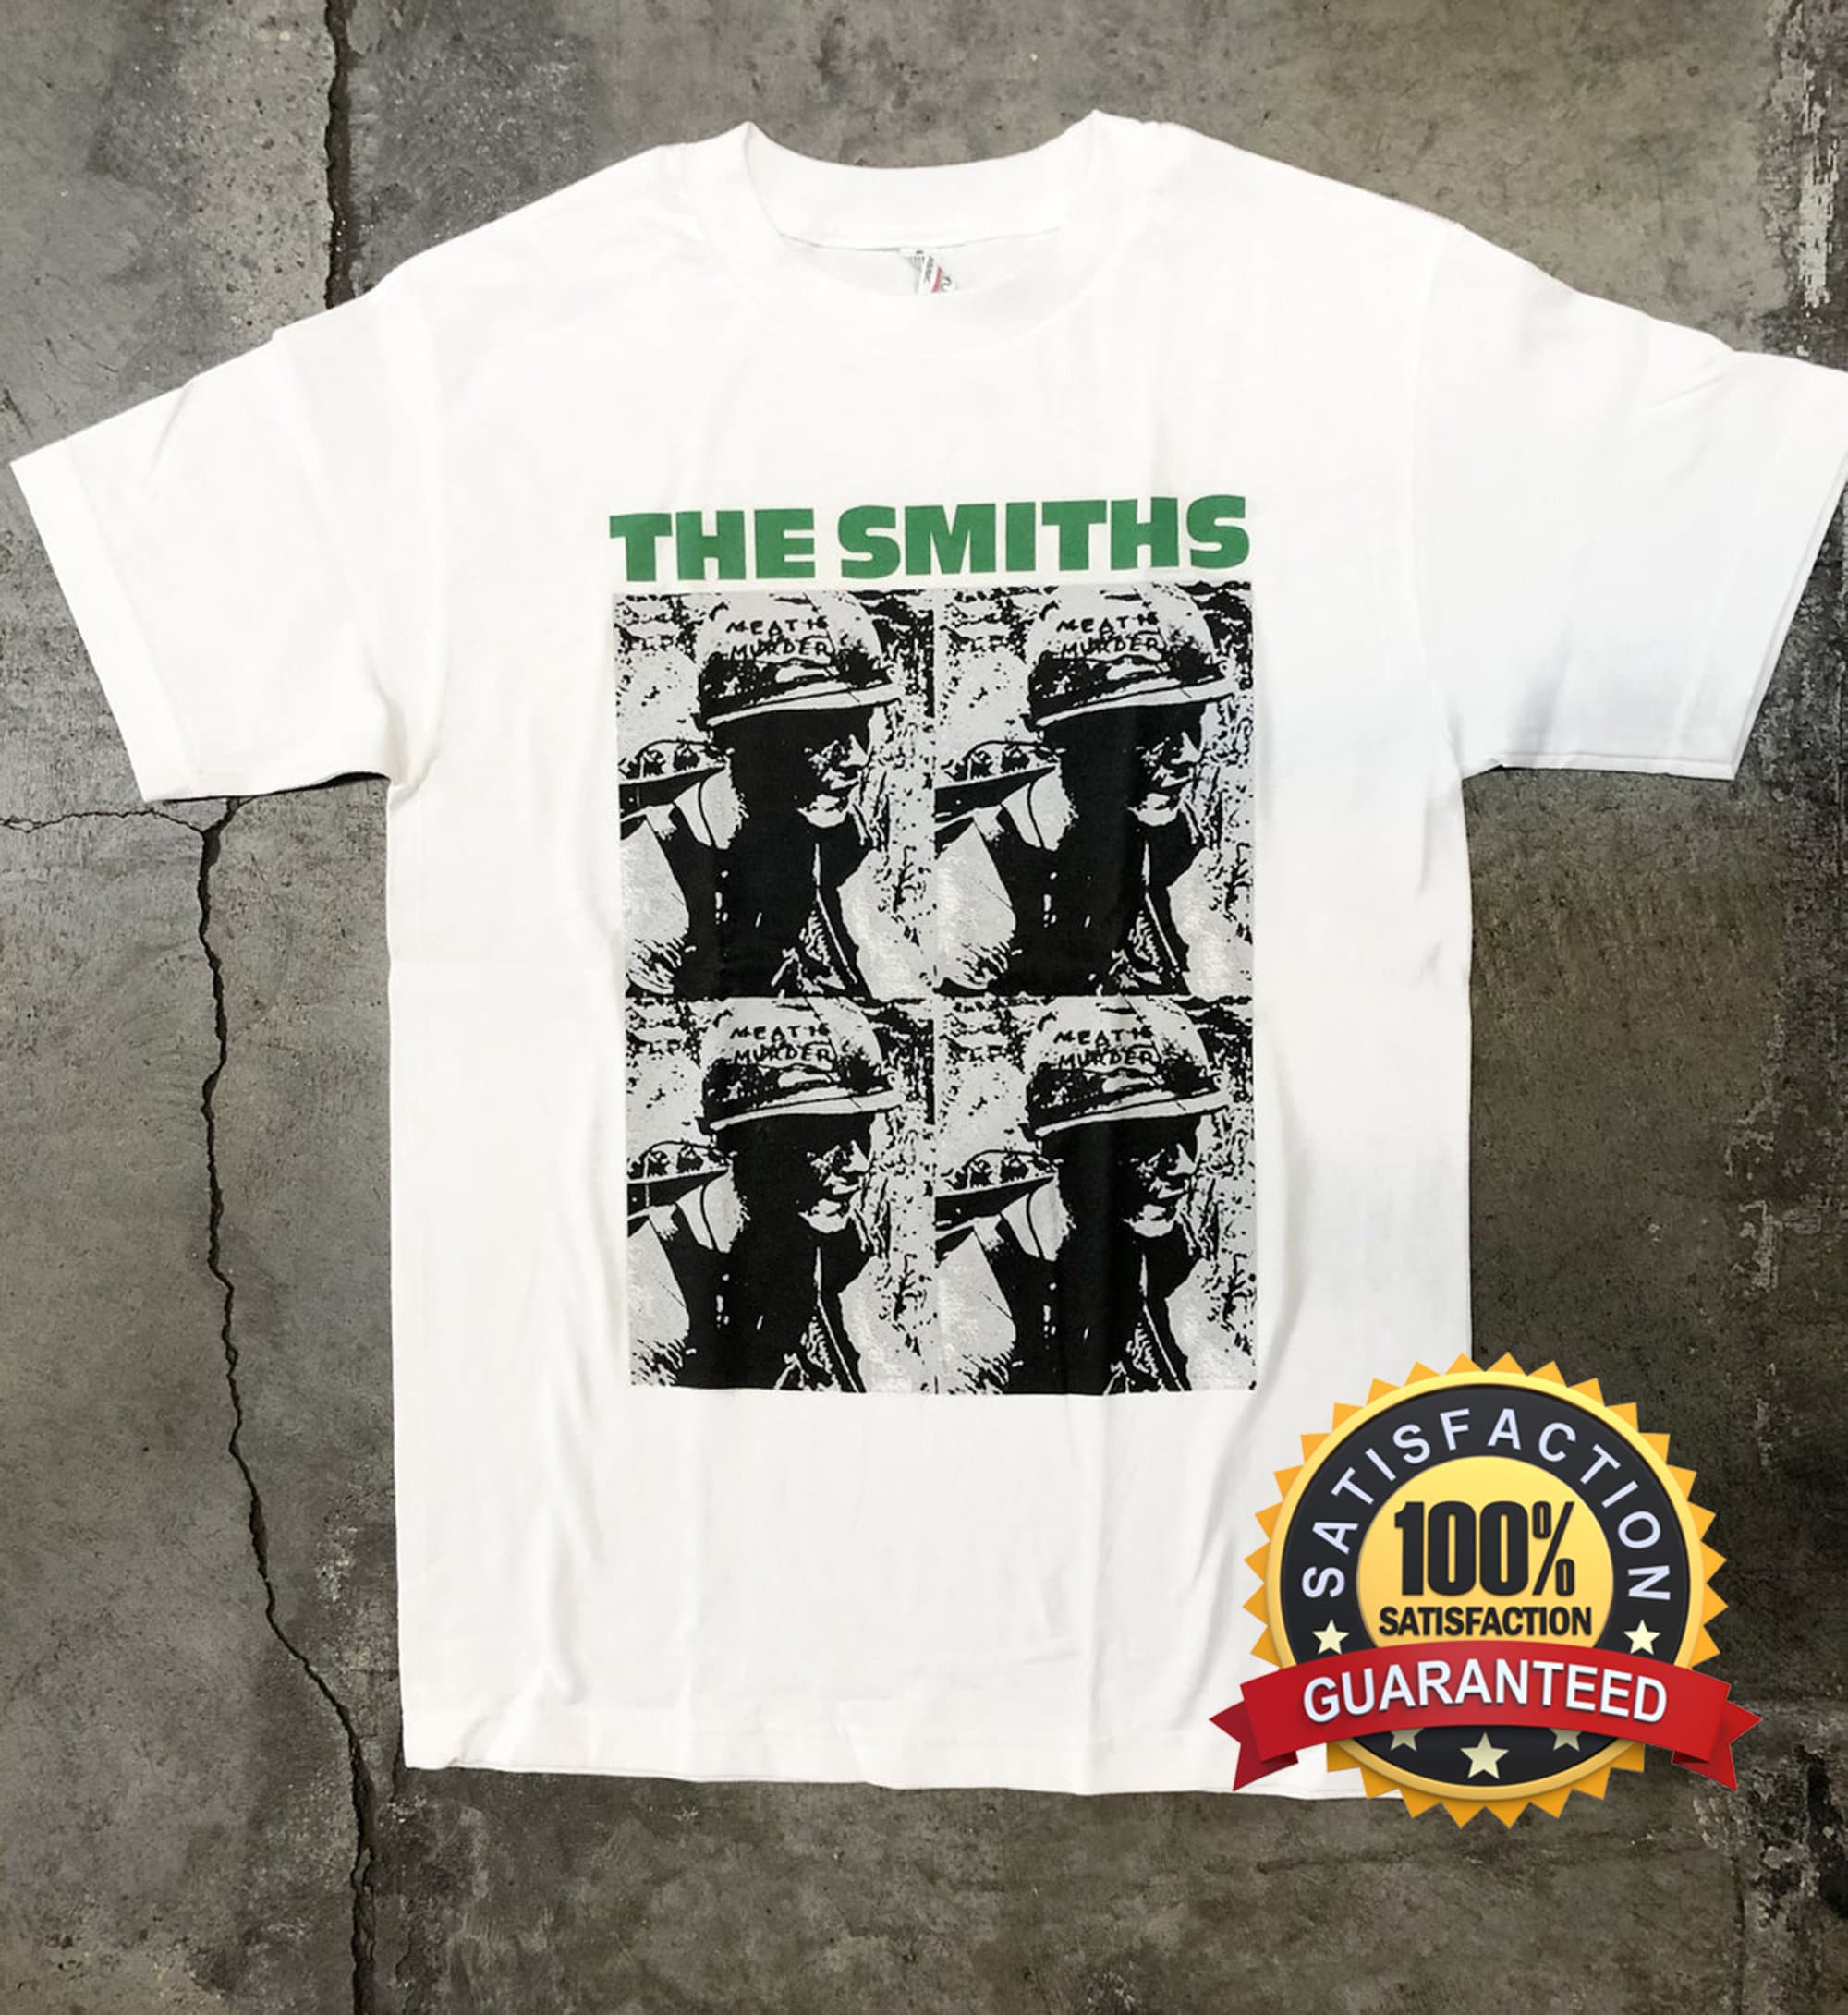 The Smiths Shirt The Smiths T-Shirt The Smiths Vintage Tee | Etsy